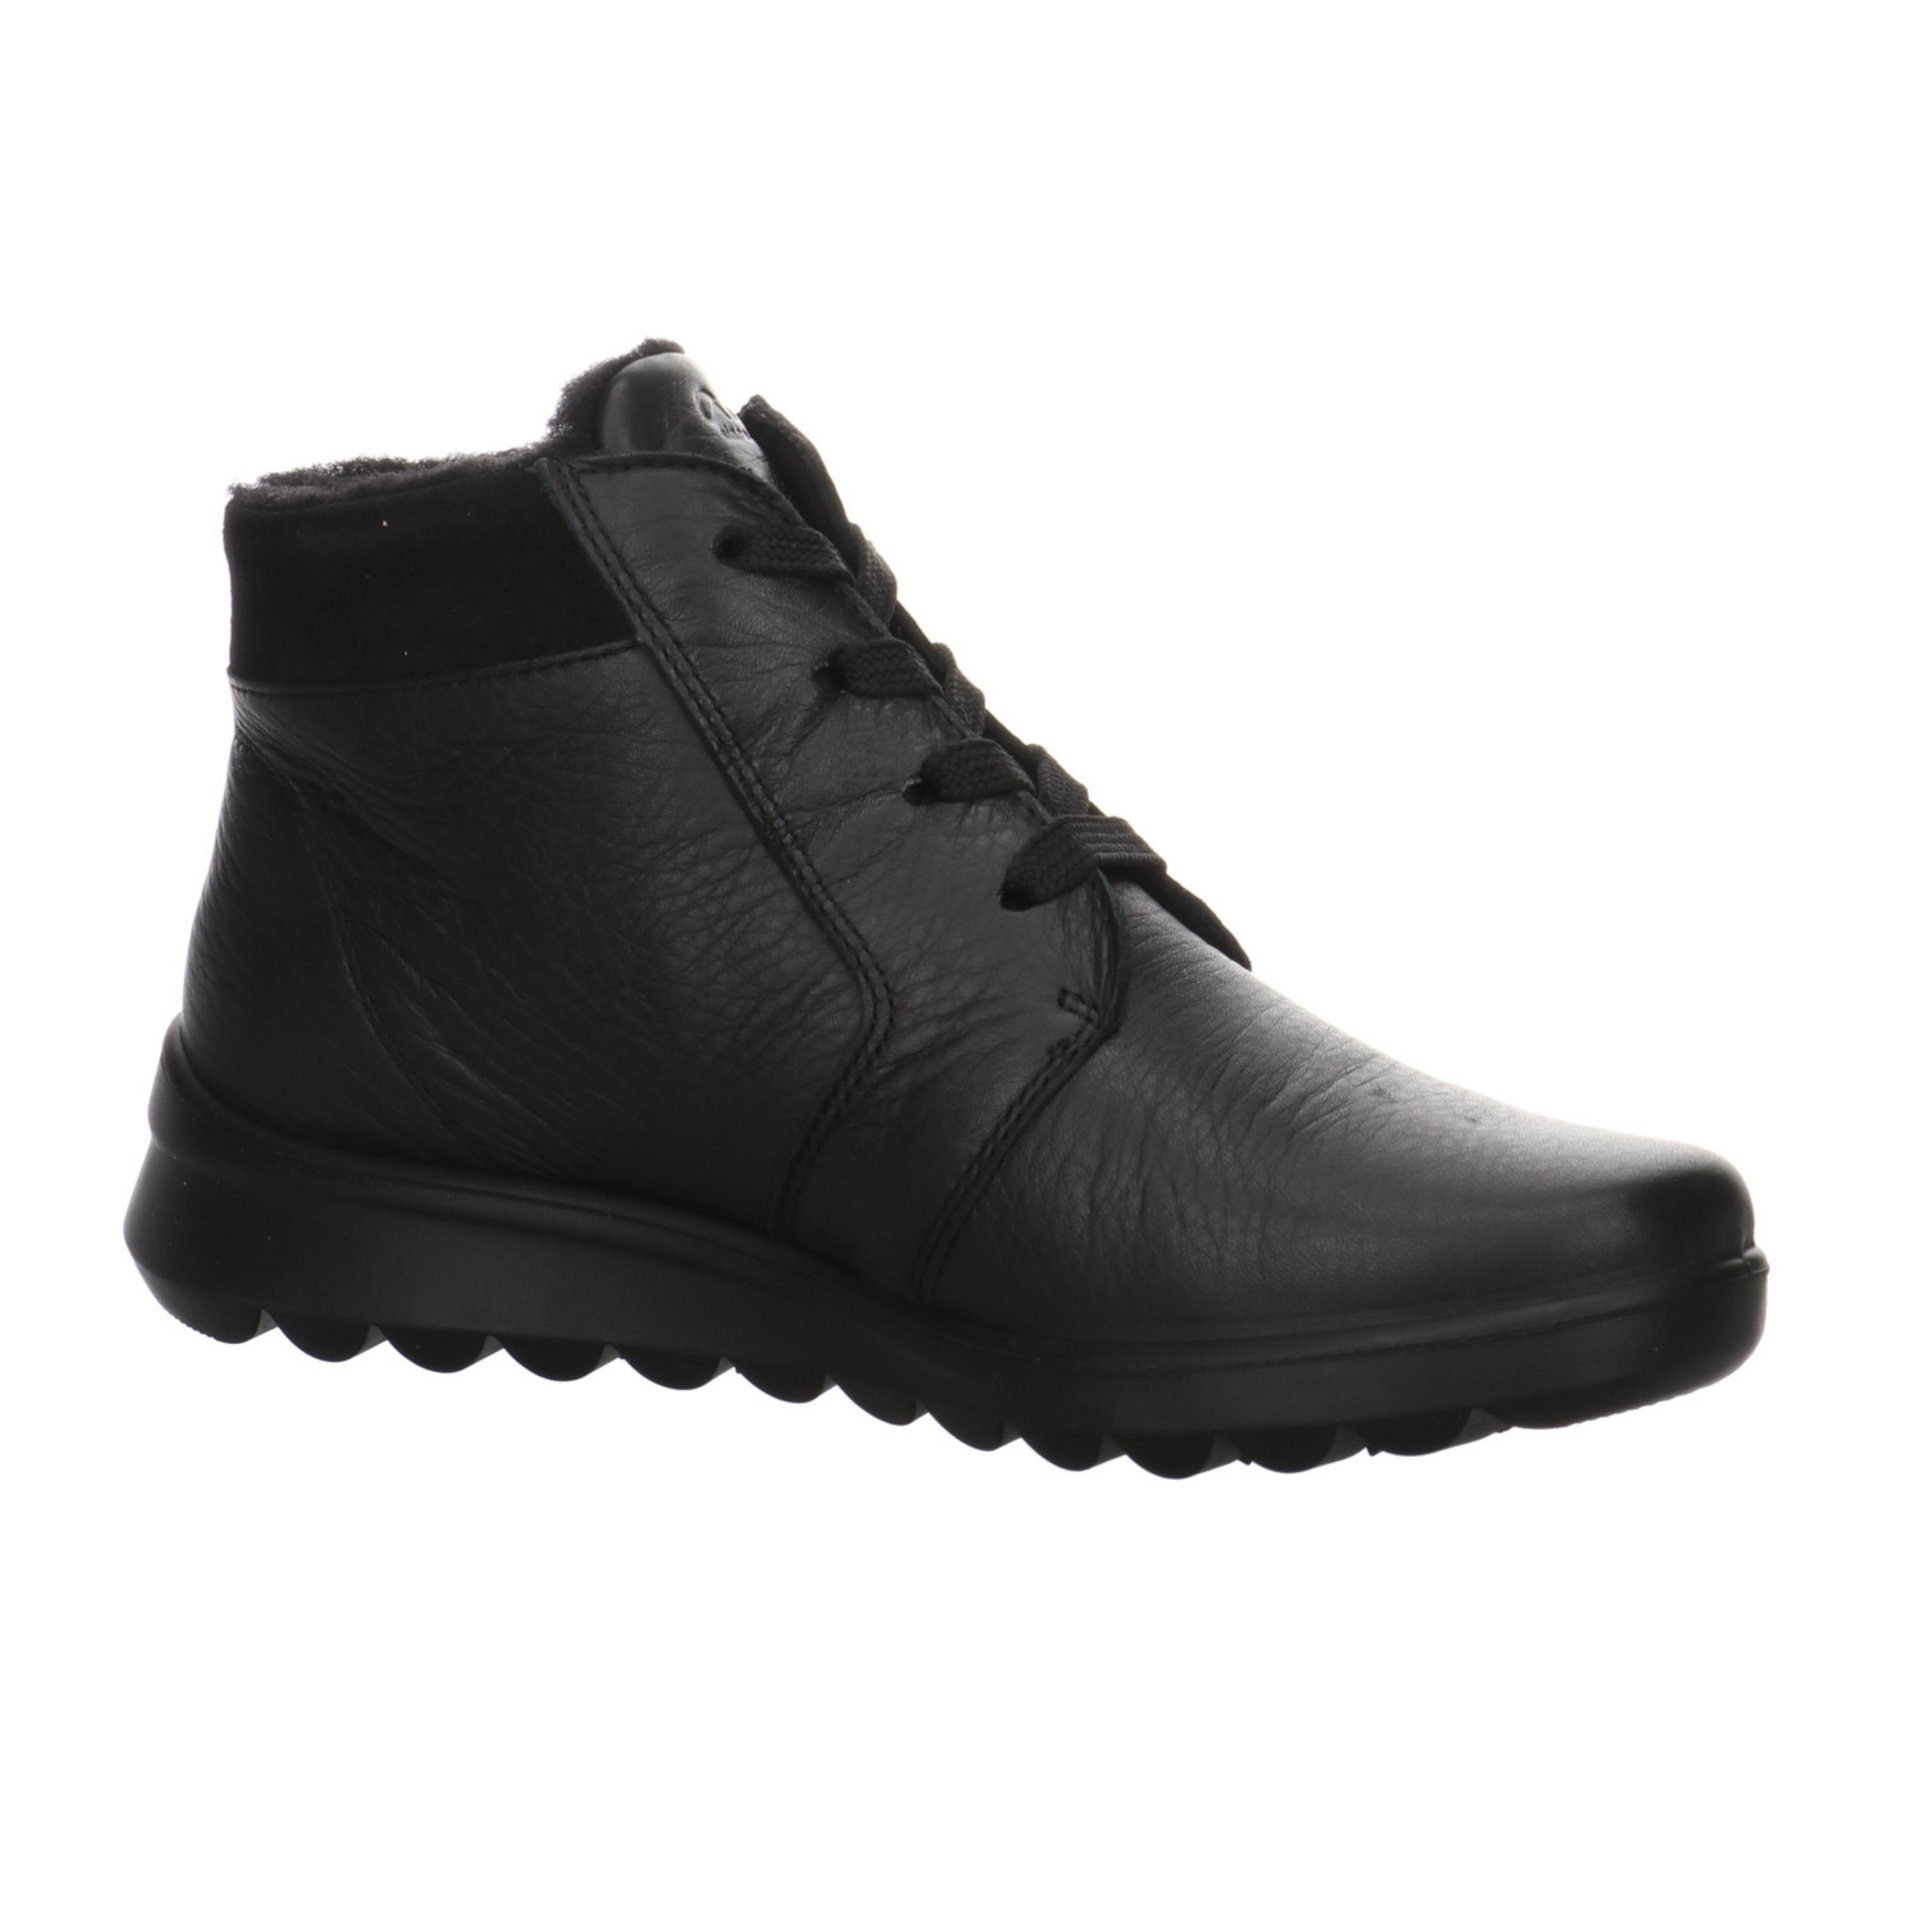 Ara Damen 046874 Toronto Stiefel Stiefelette Boots Schuhe Lederkombination schwarz